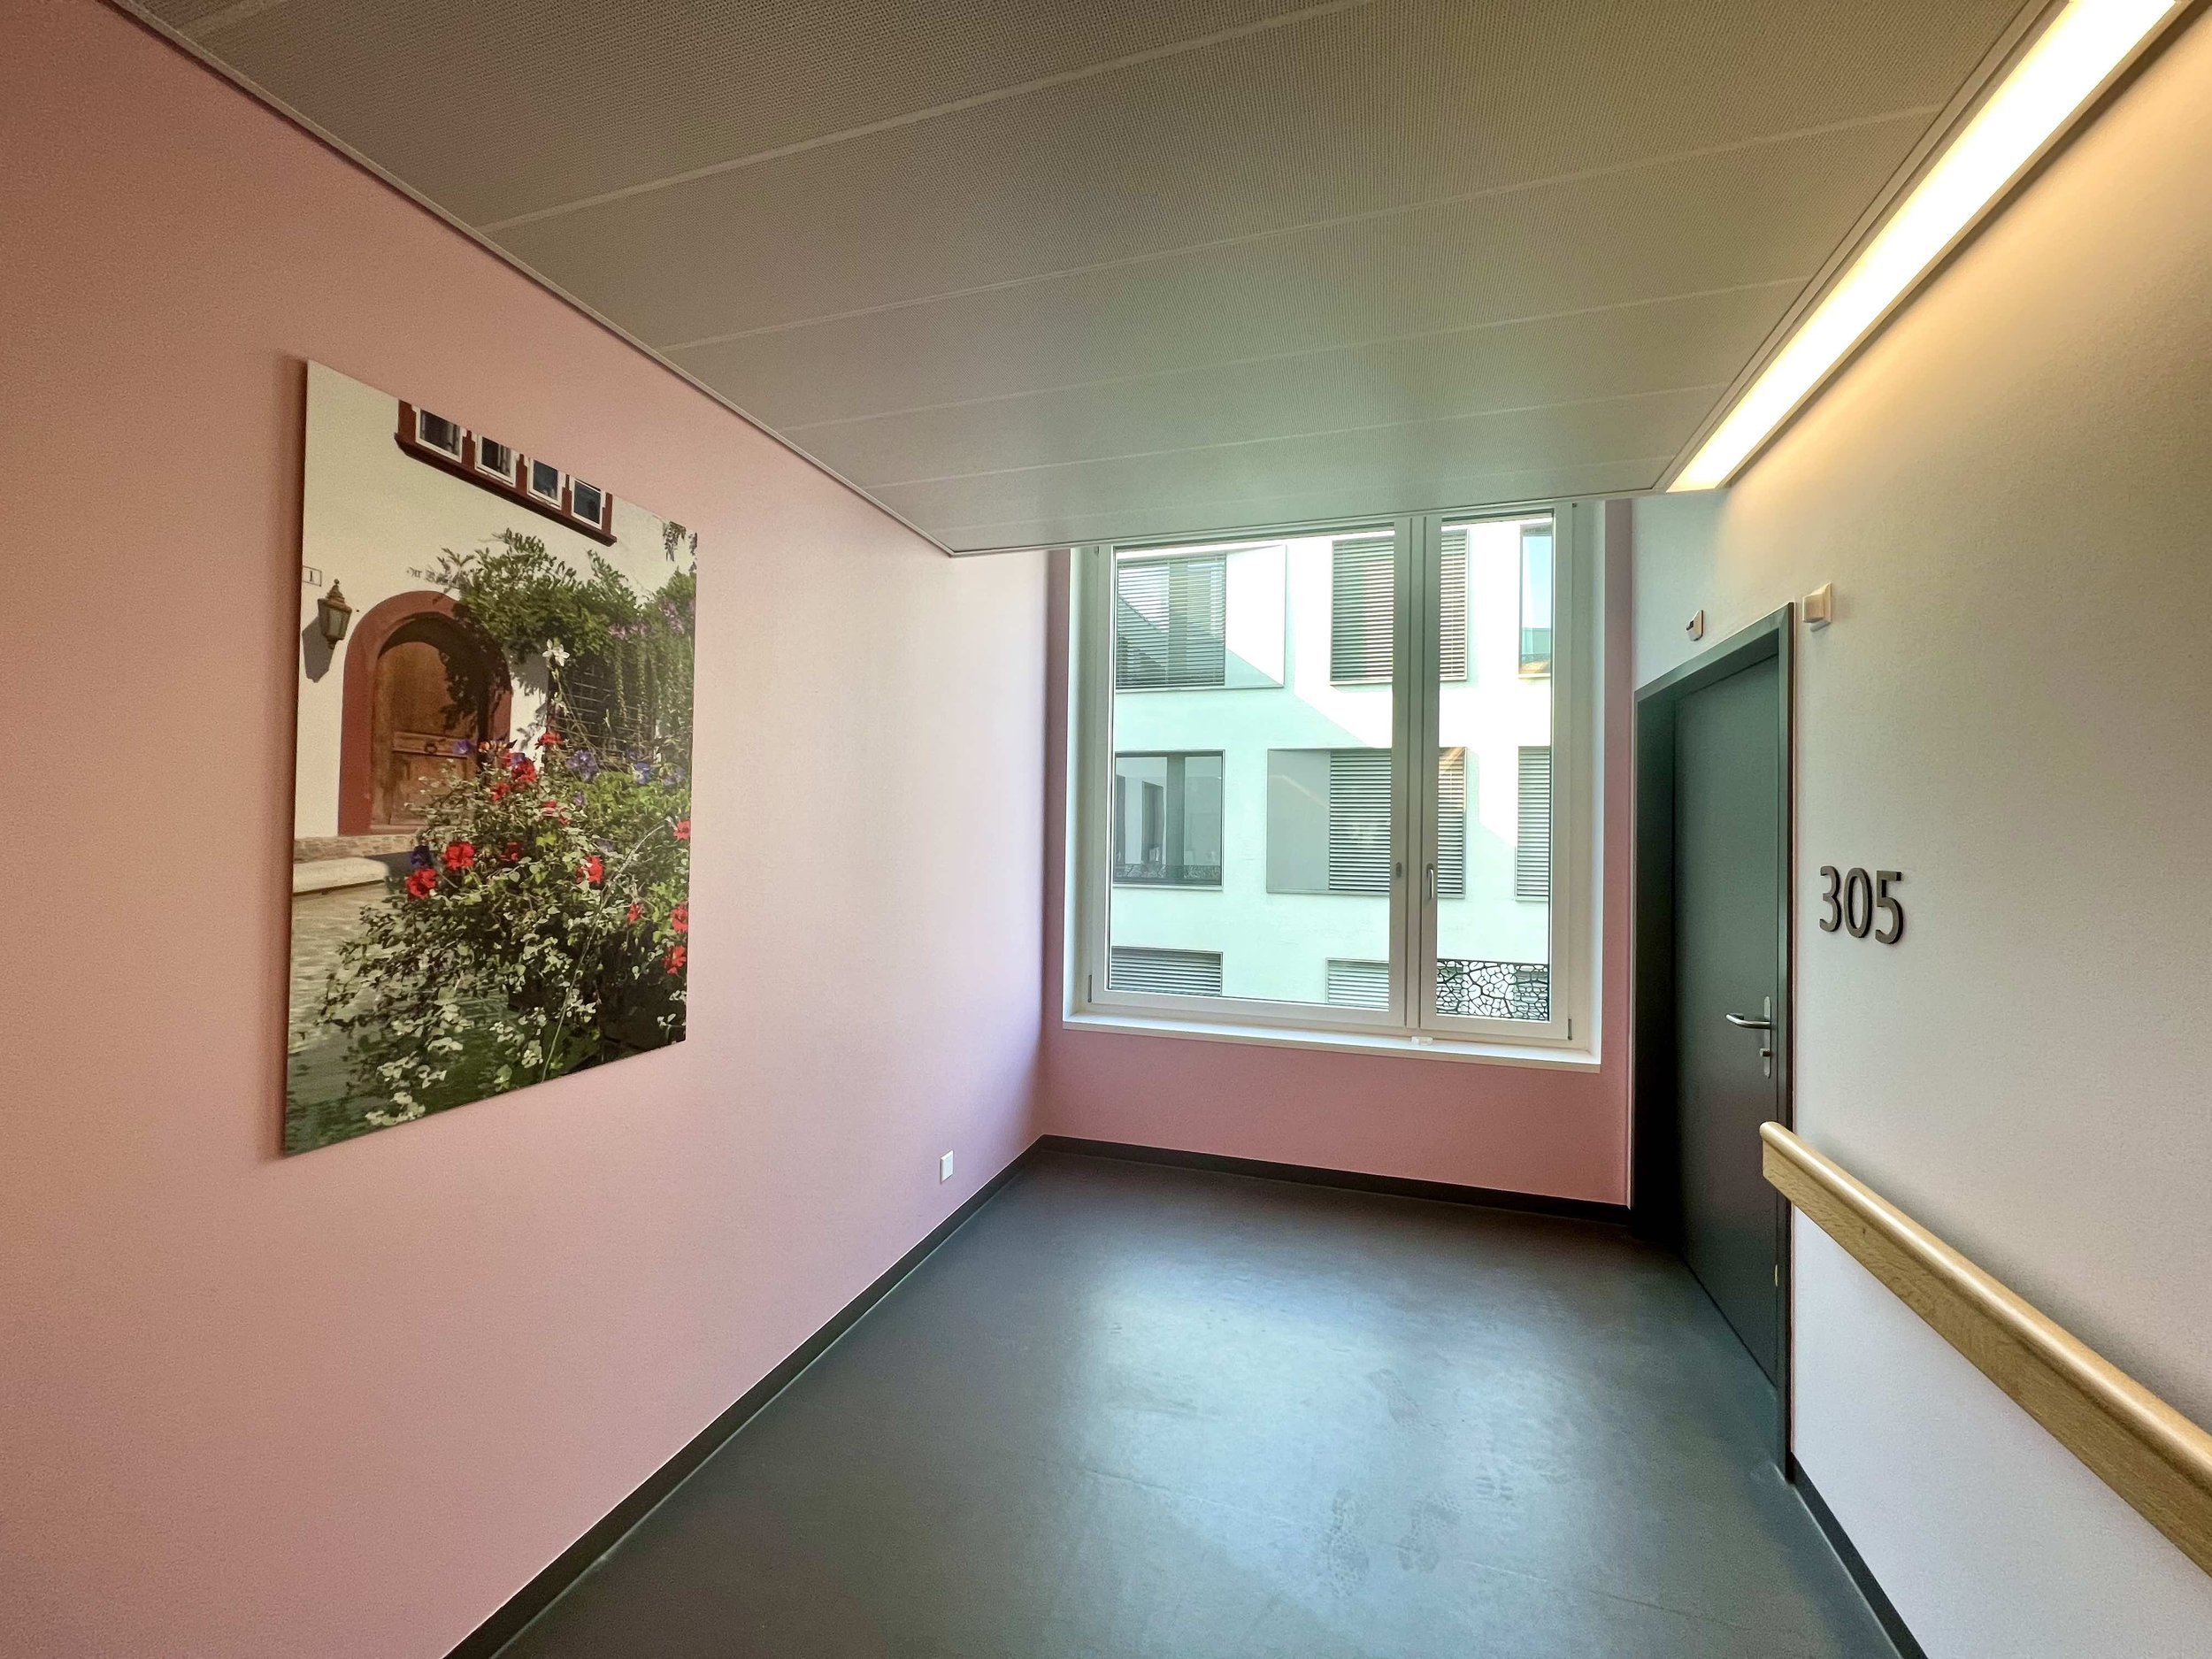  images on the hallways walls in Felix Platter Hospital in Basel